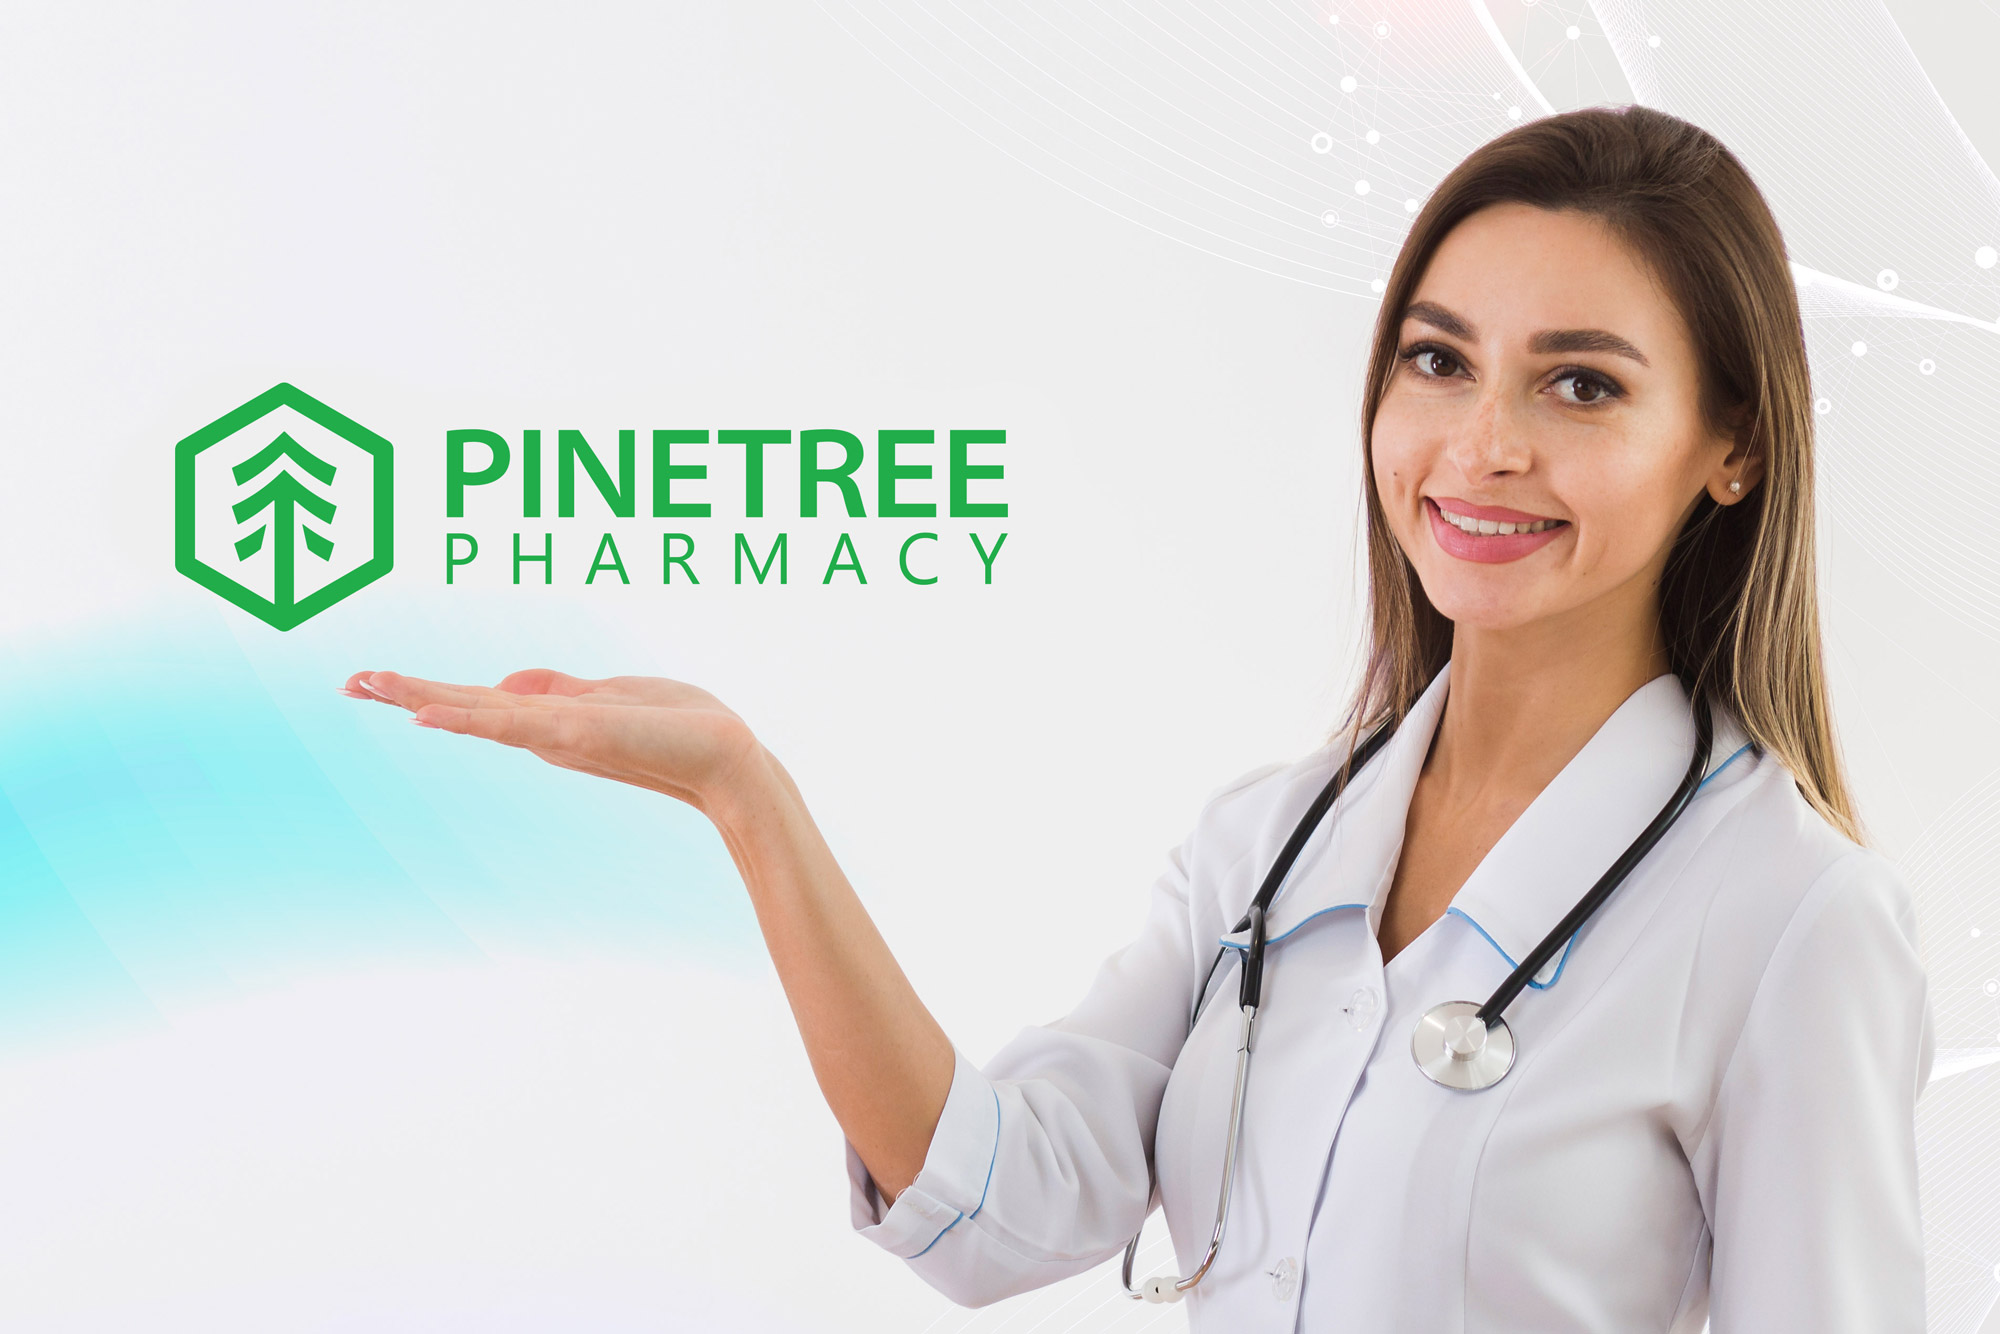 Pinetree Pharmacy Services